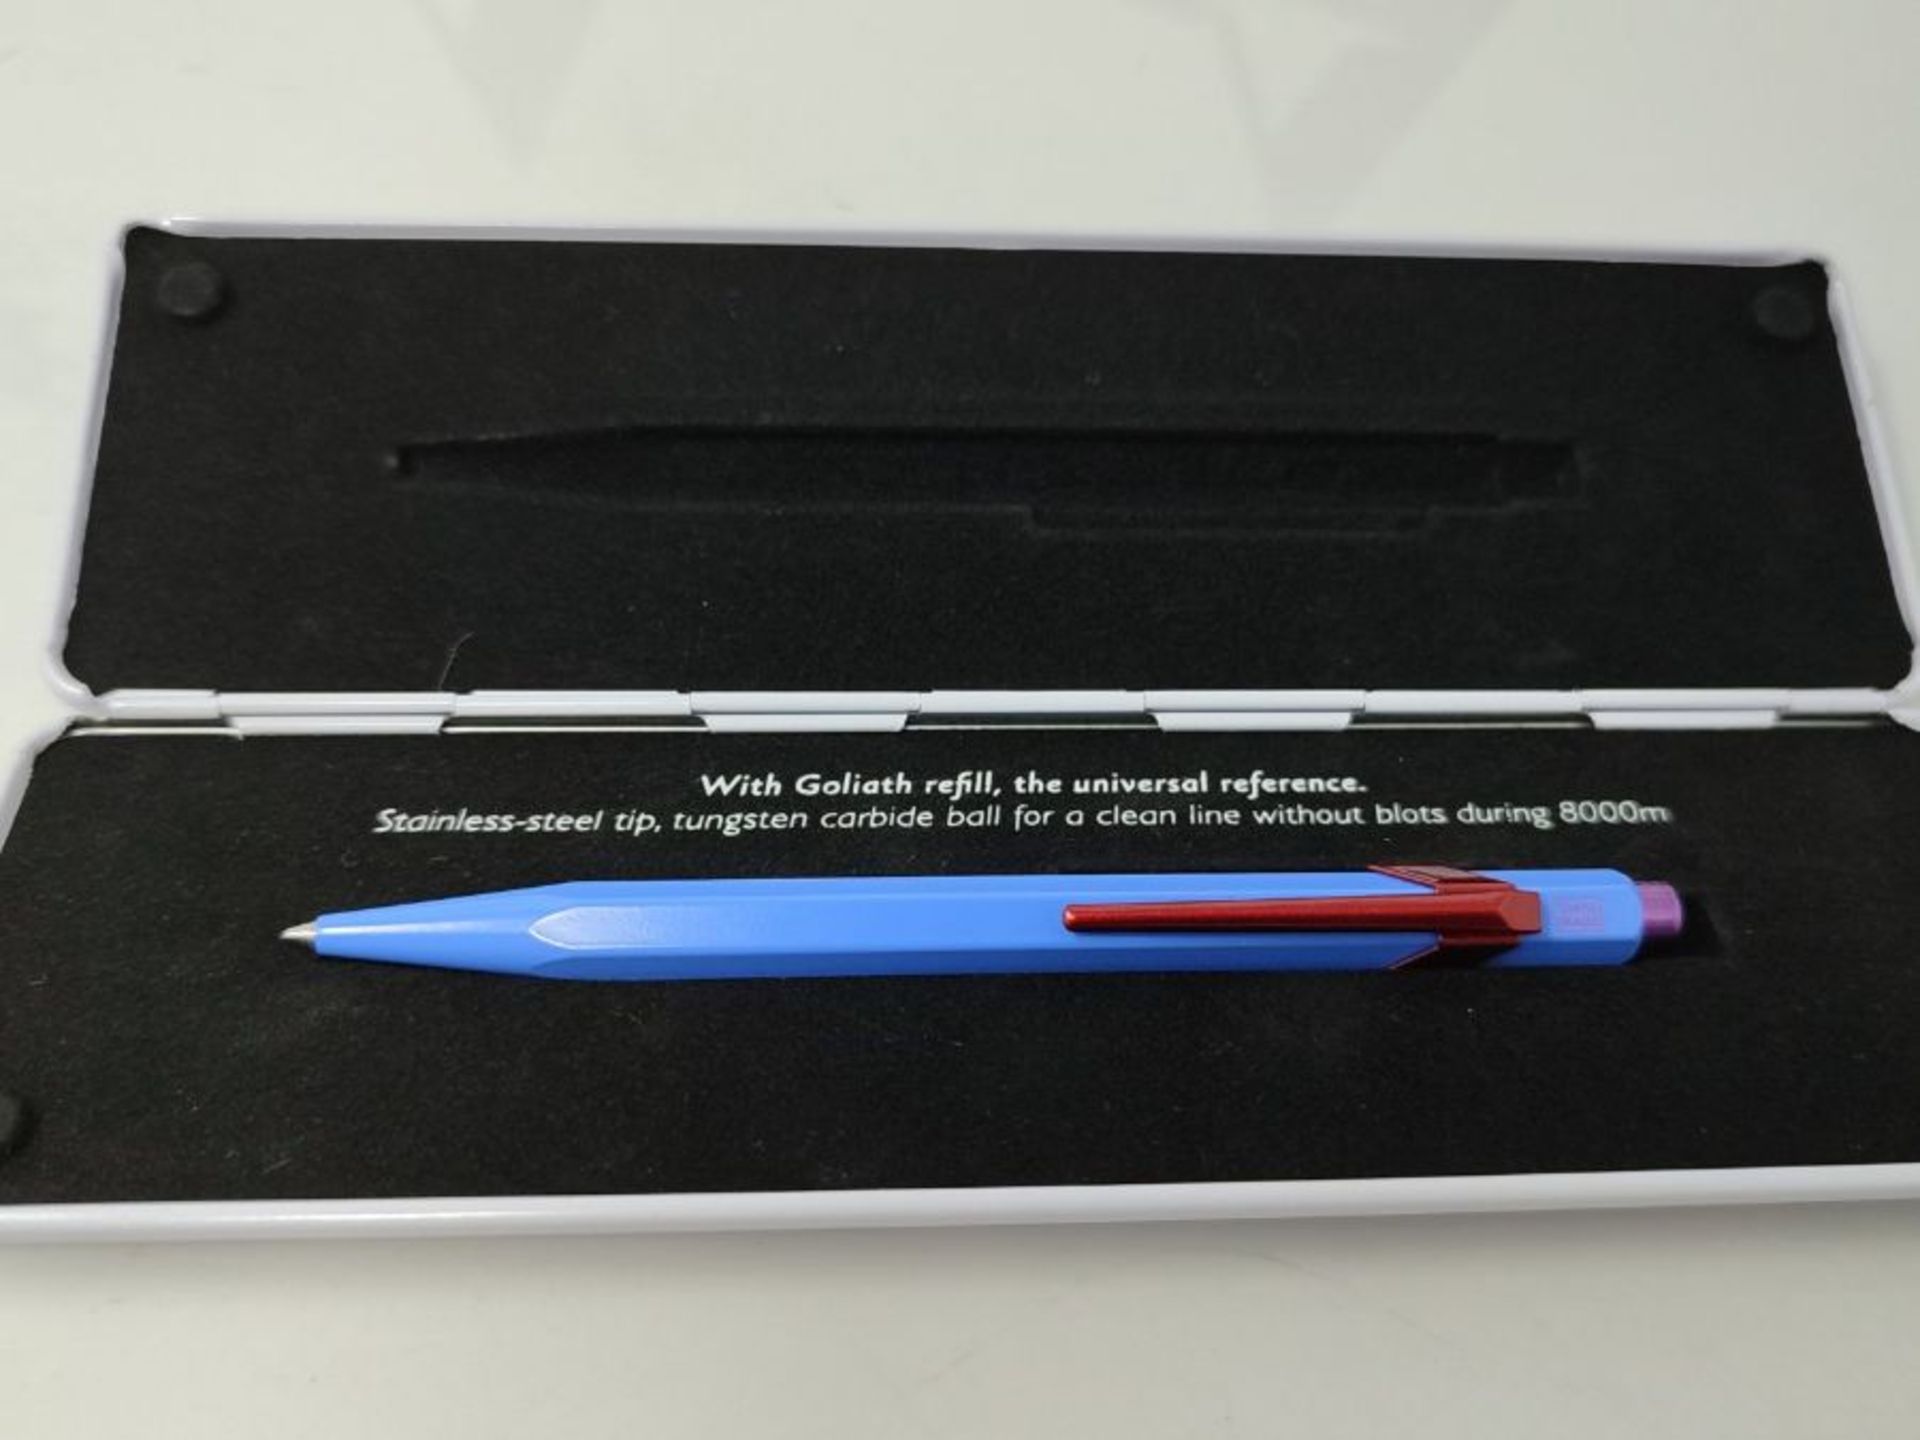 Caran d'Ache 849 Ballpoint Pen 'Claim Your Style' Edition 2 - Cobalt Blue - Image 2 of 2